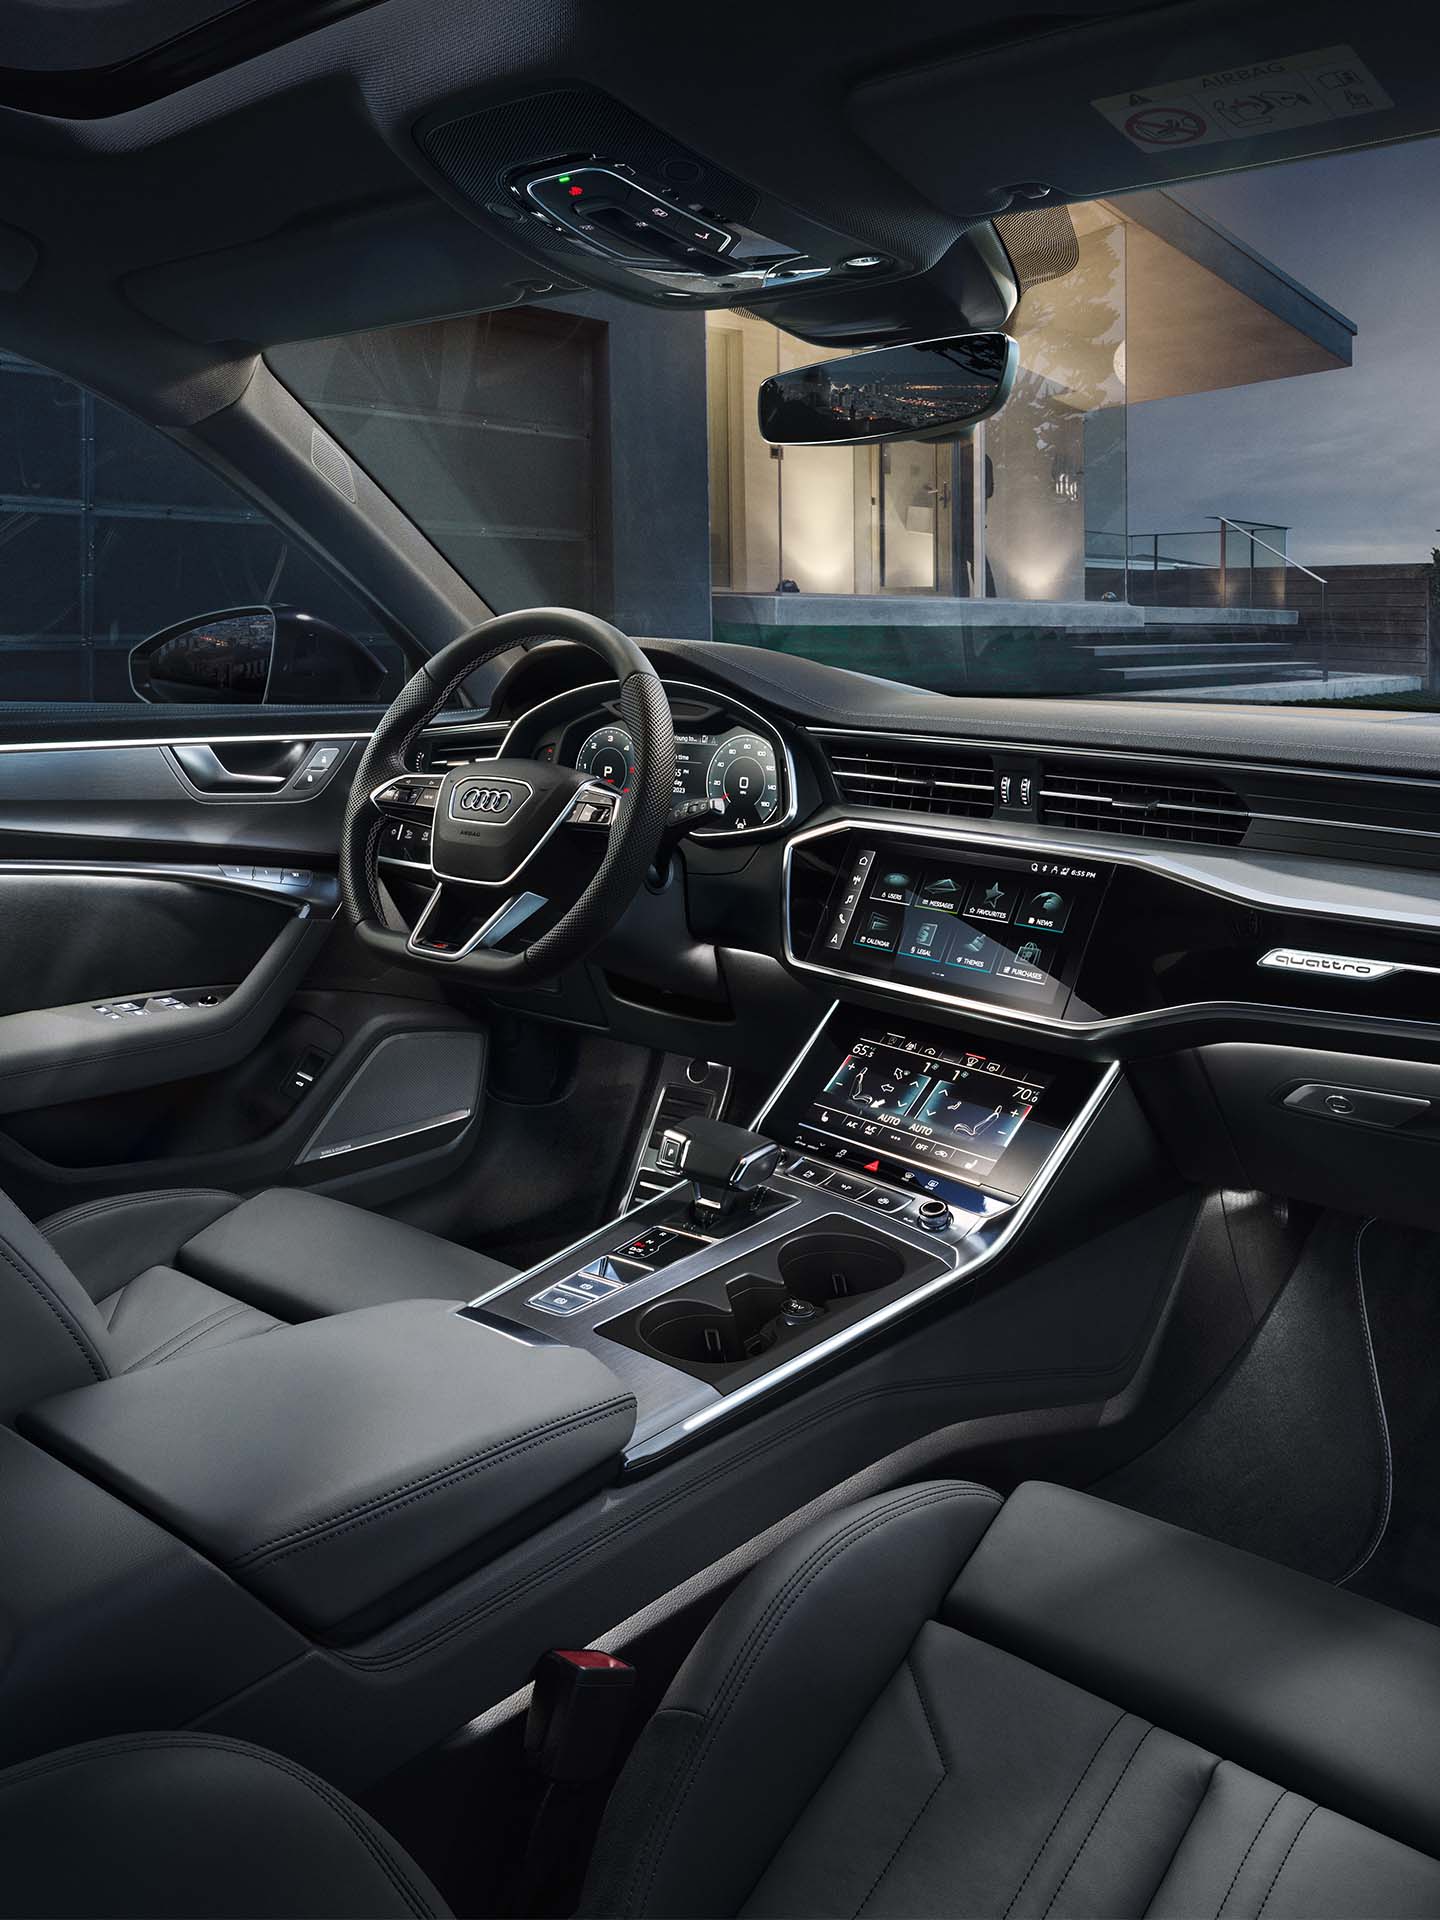 Thematically illuminated Audi cockpit